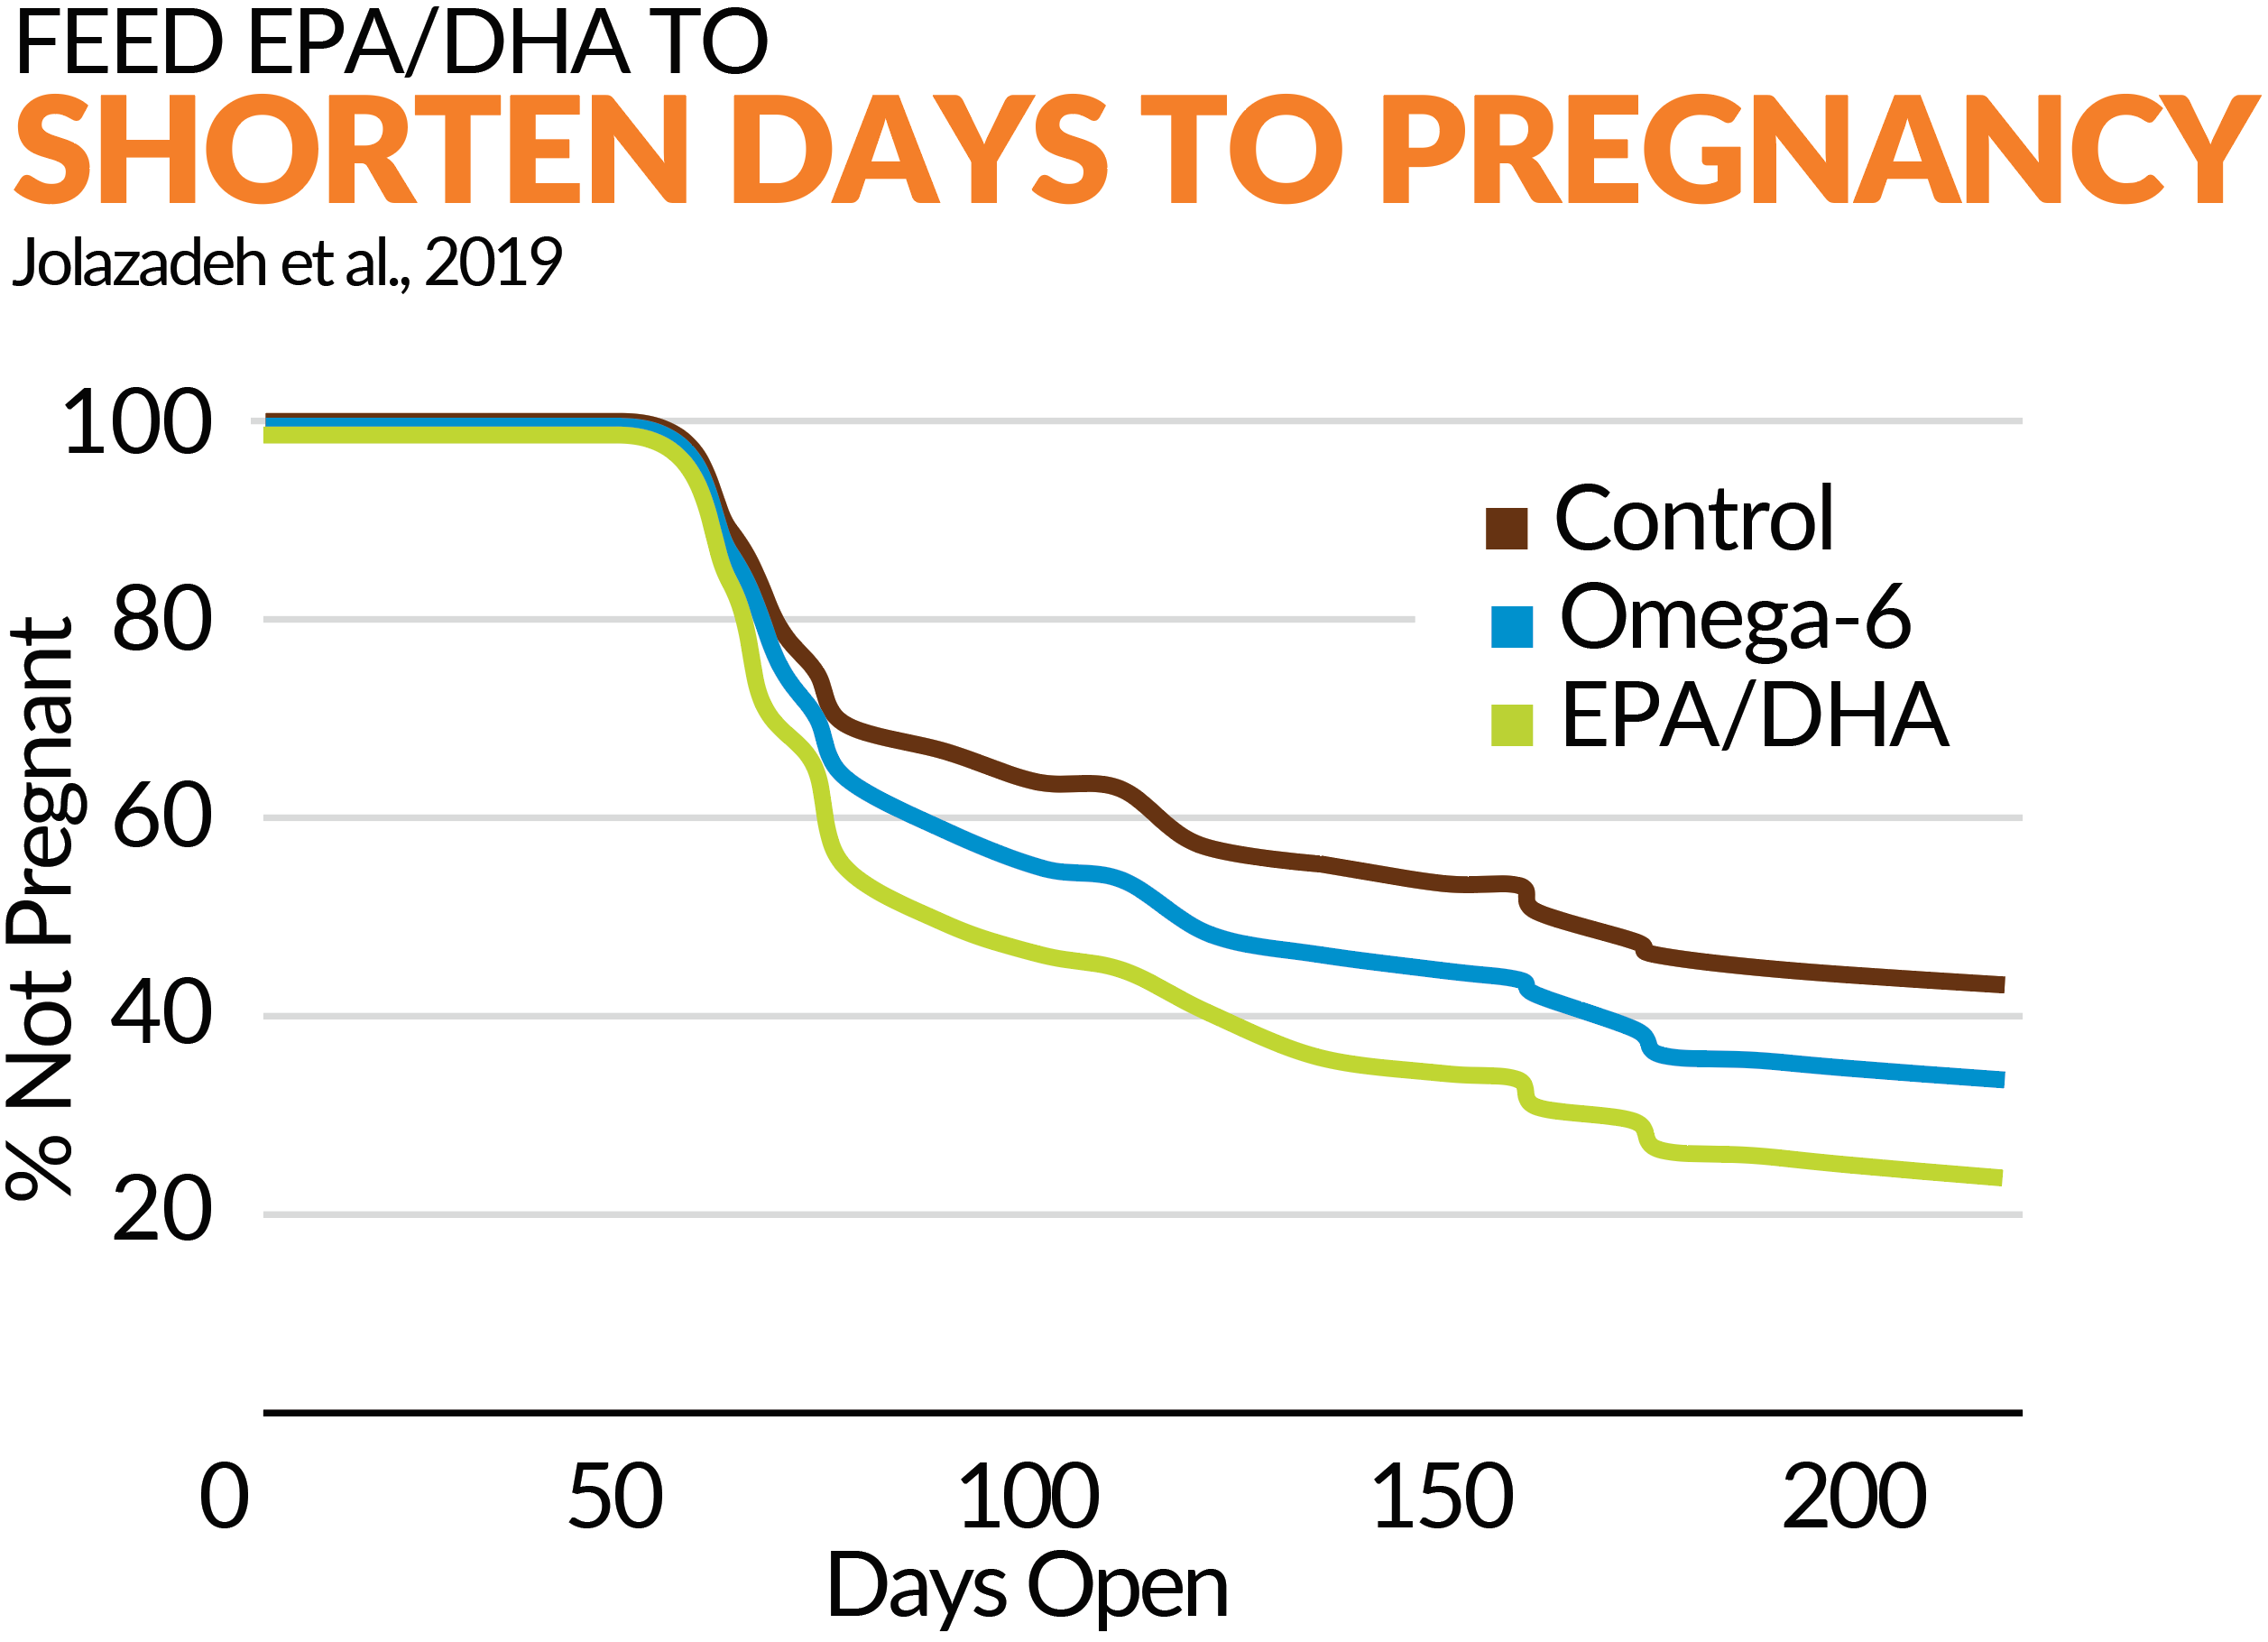 Chart showing that feeding EPA/DHA shortens days to pregnancy